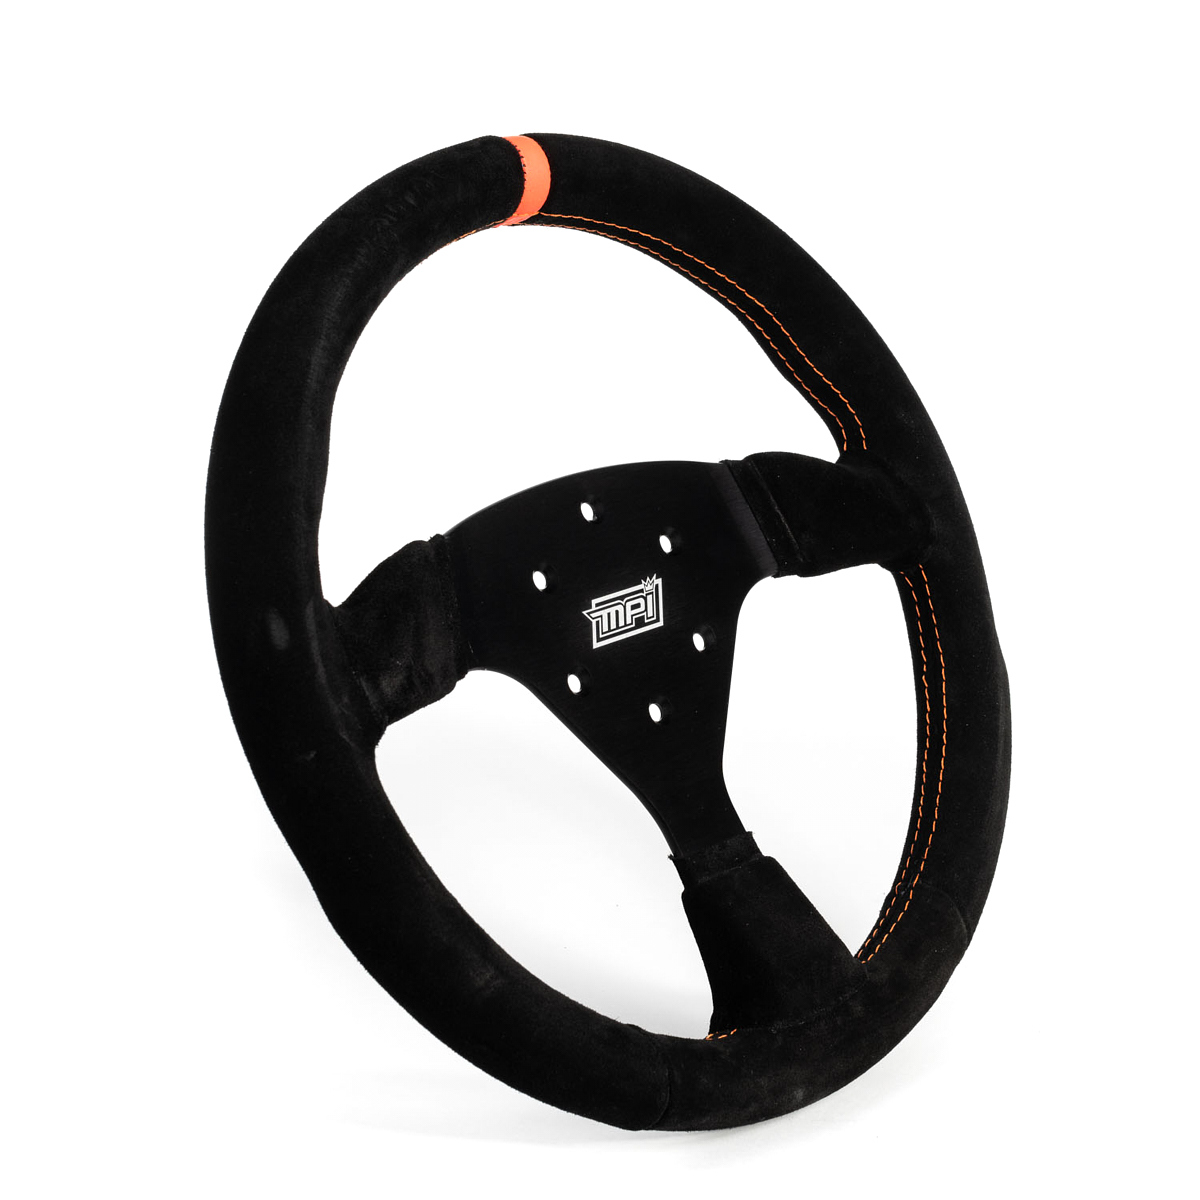 MPI USA MPI-F2-13 Steering Wheel, Track Day, 13 in Diameter, 1-1/4 in Dish, 3-Spoke, Black Suede Grip, Orange Stripe, Aluminum, Black Anodized, Each